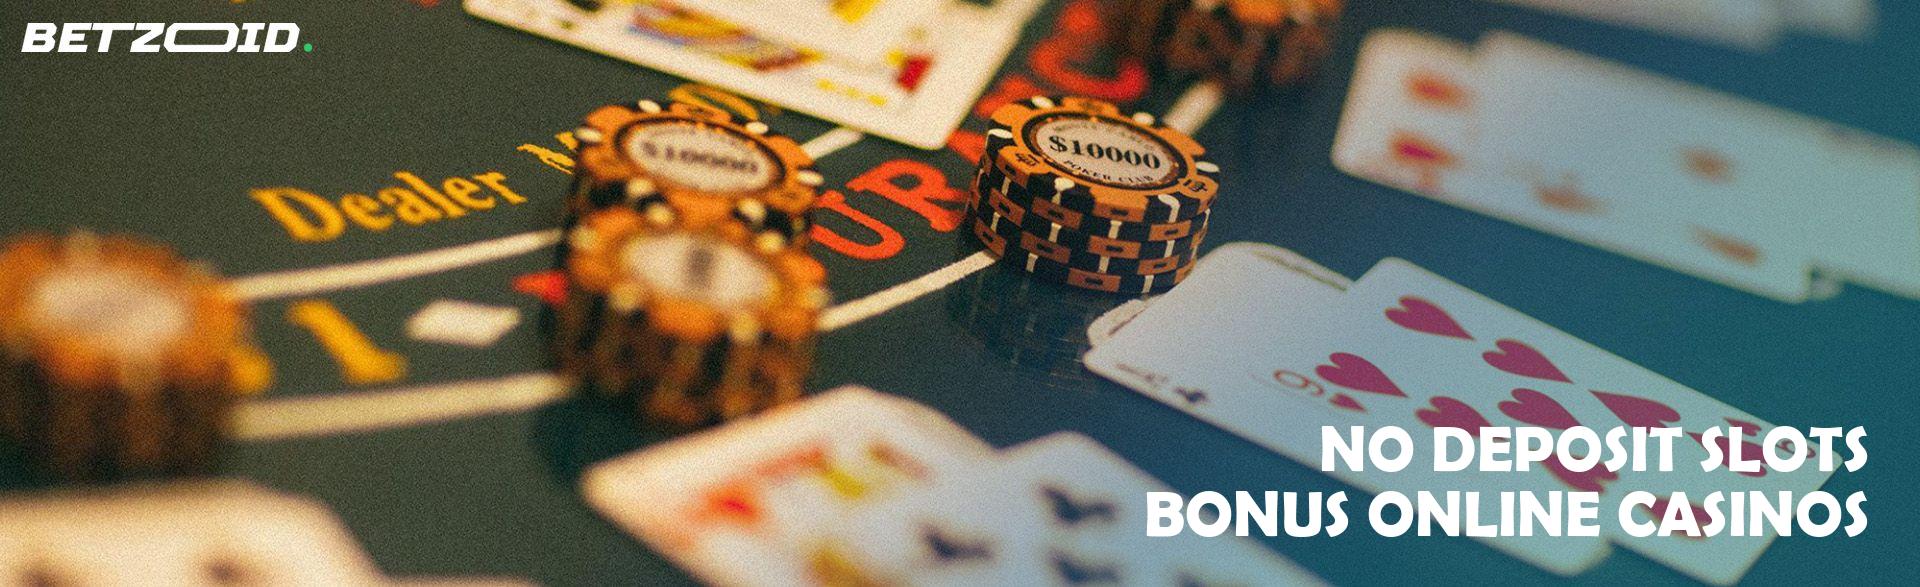 No Deposit Slots Bonus Online Casinos.